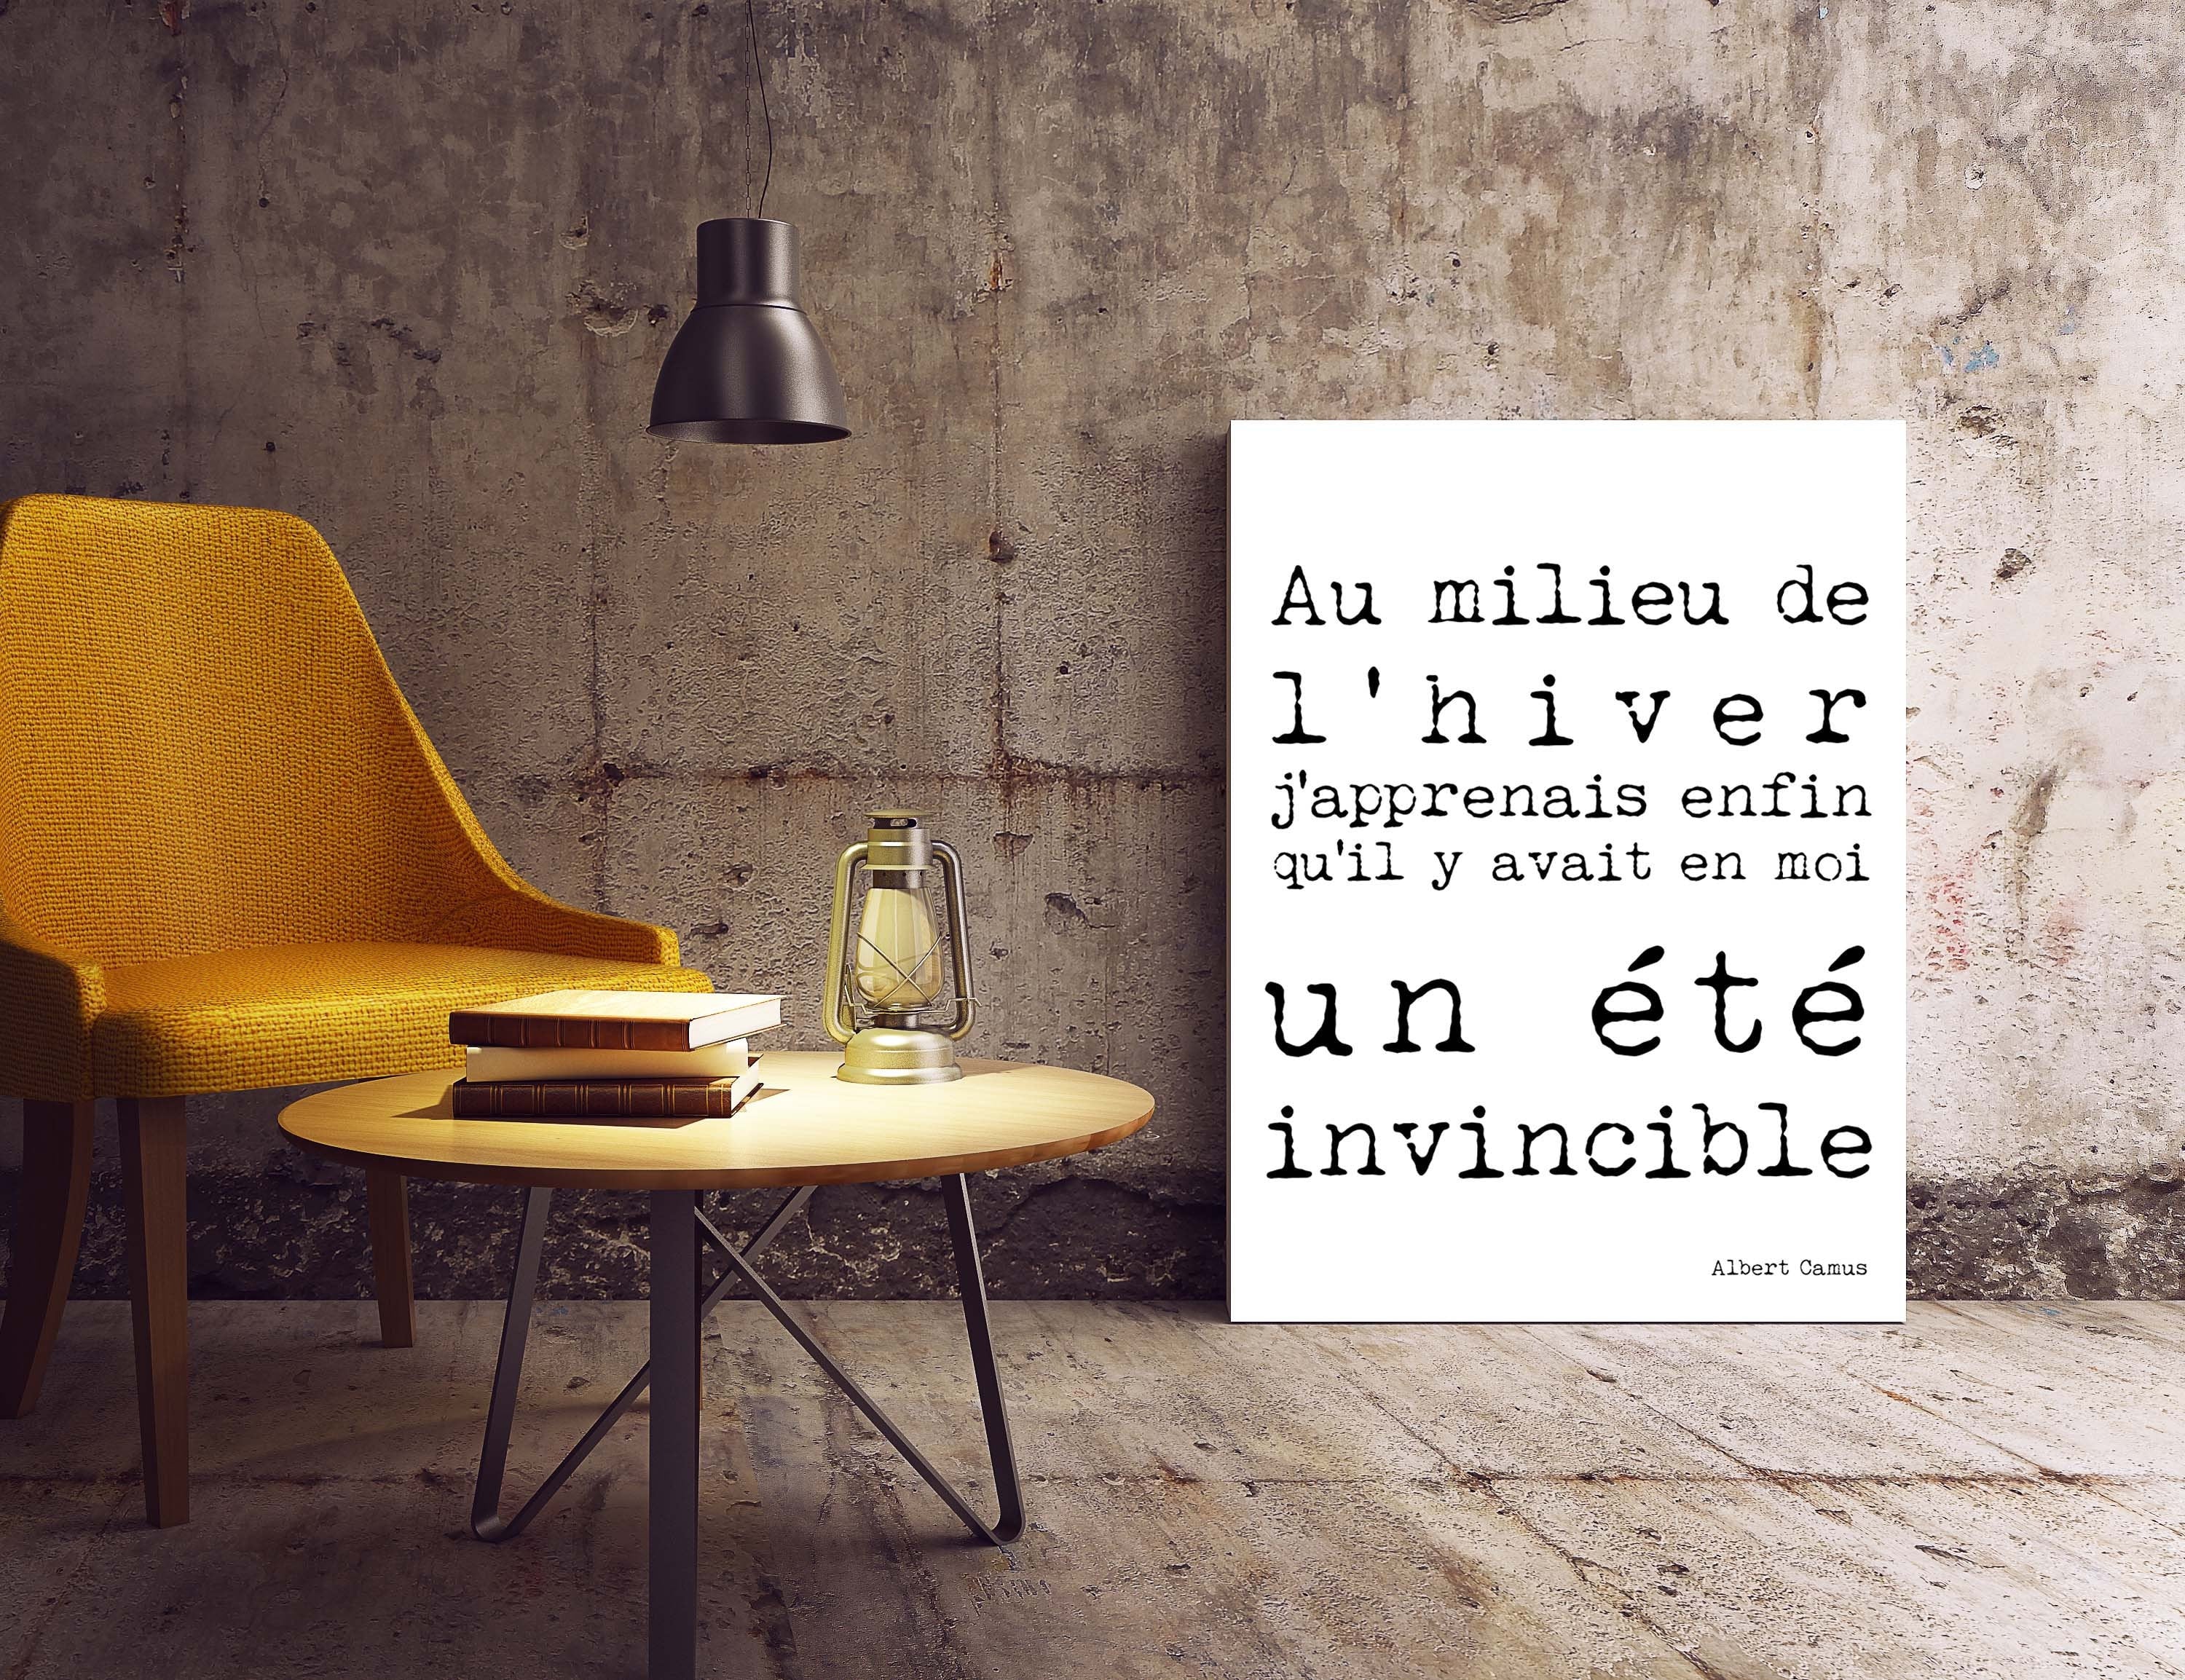 Albert Camus Quote Print in French Bedroom Decor, Office Decor